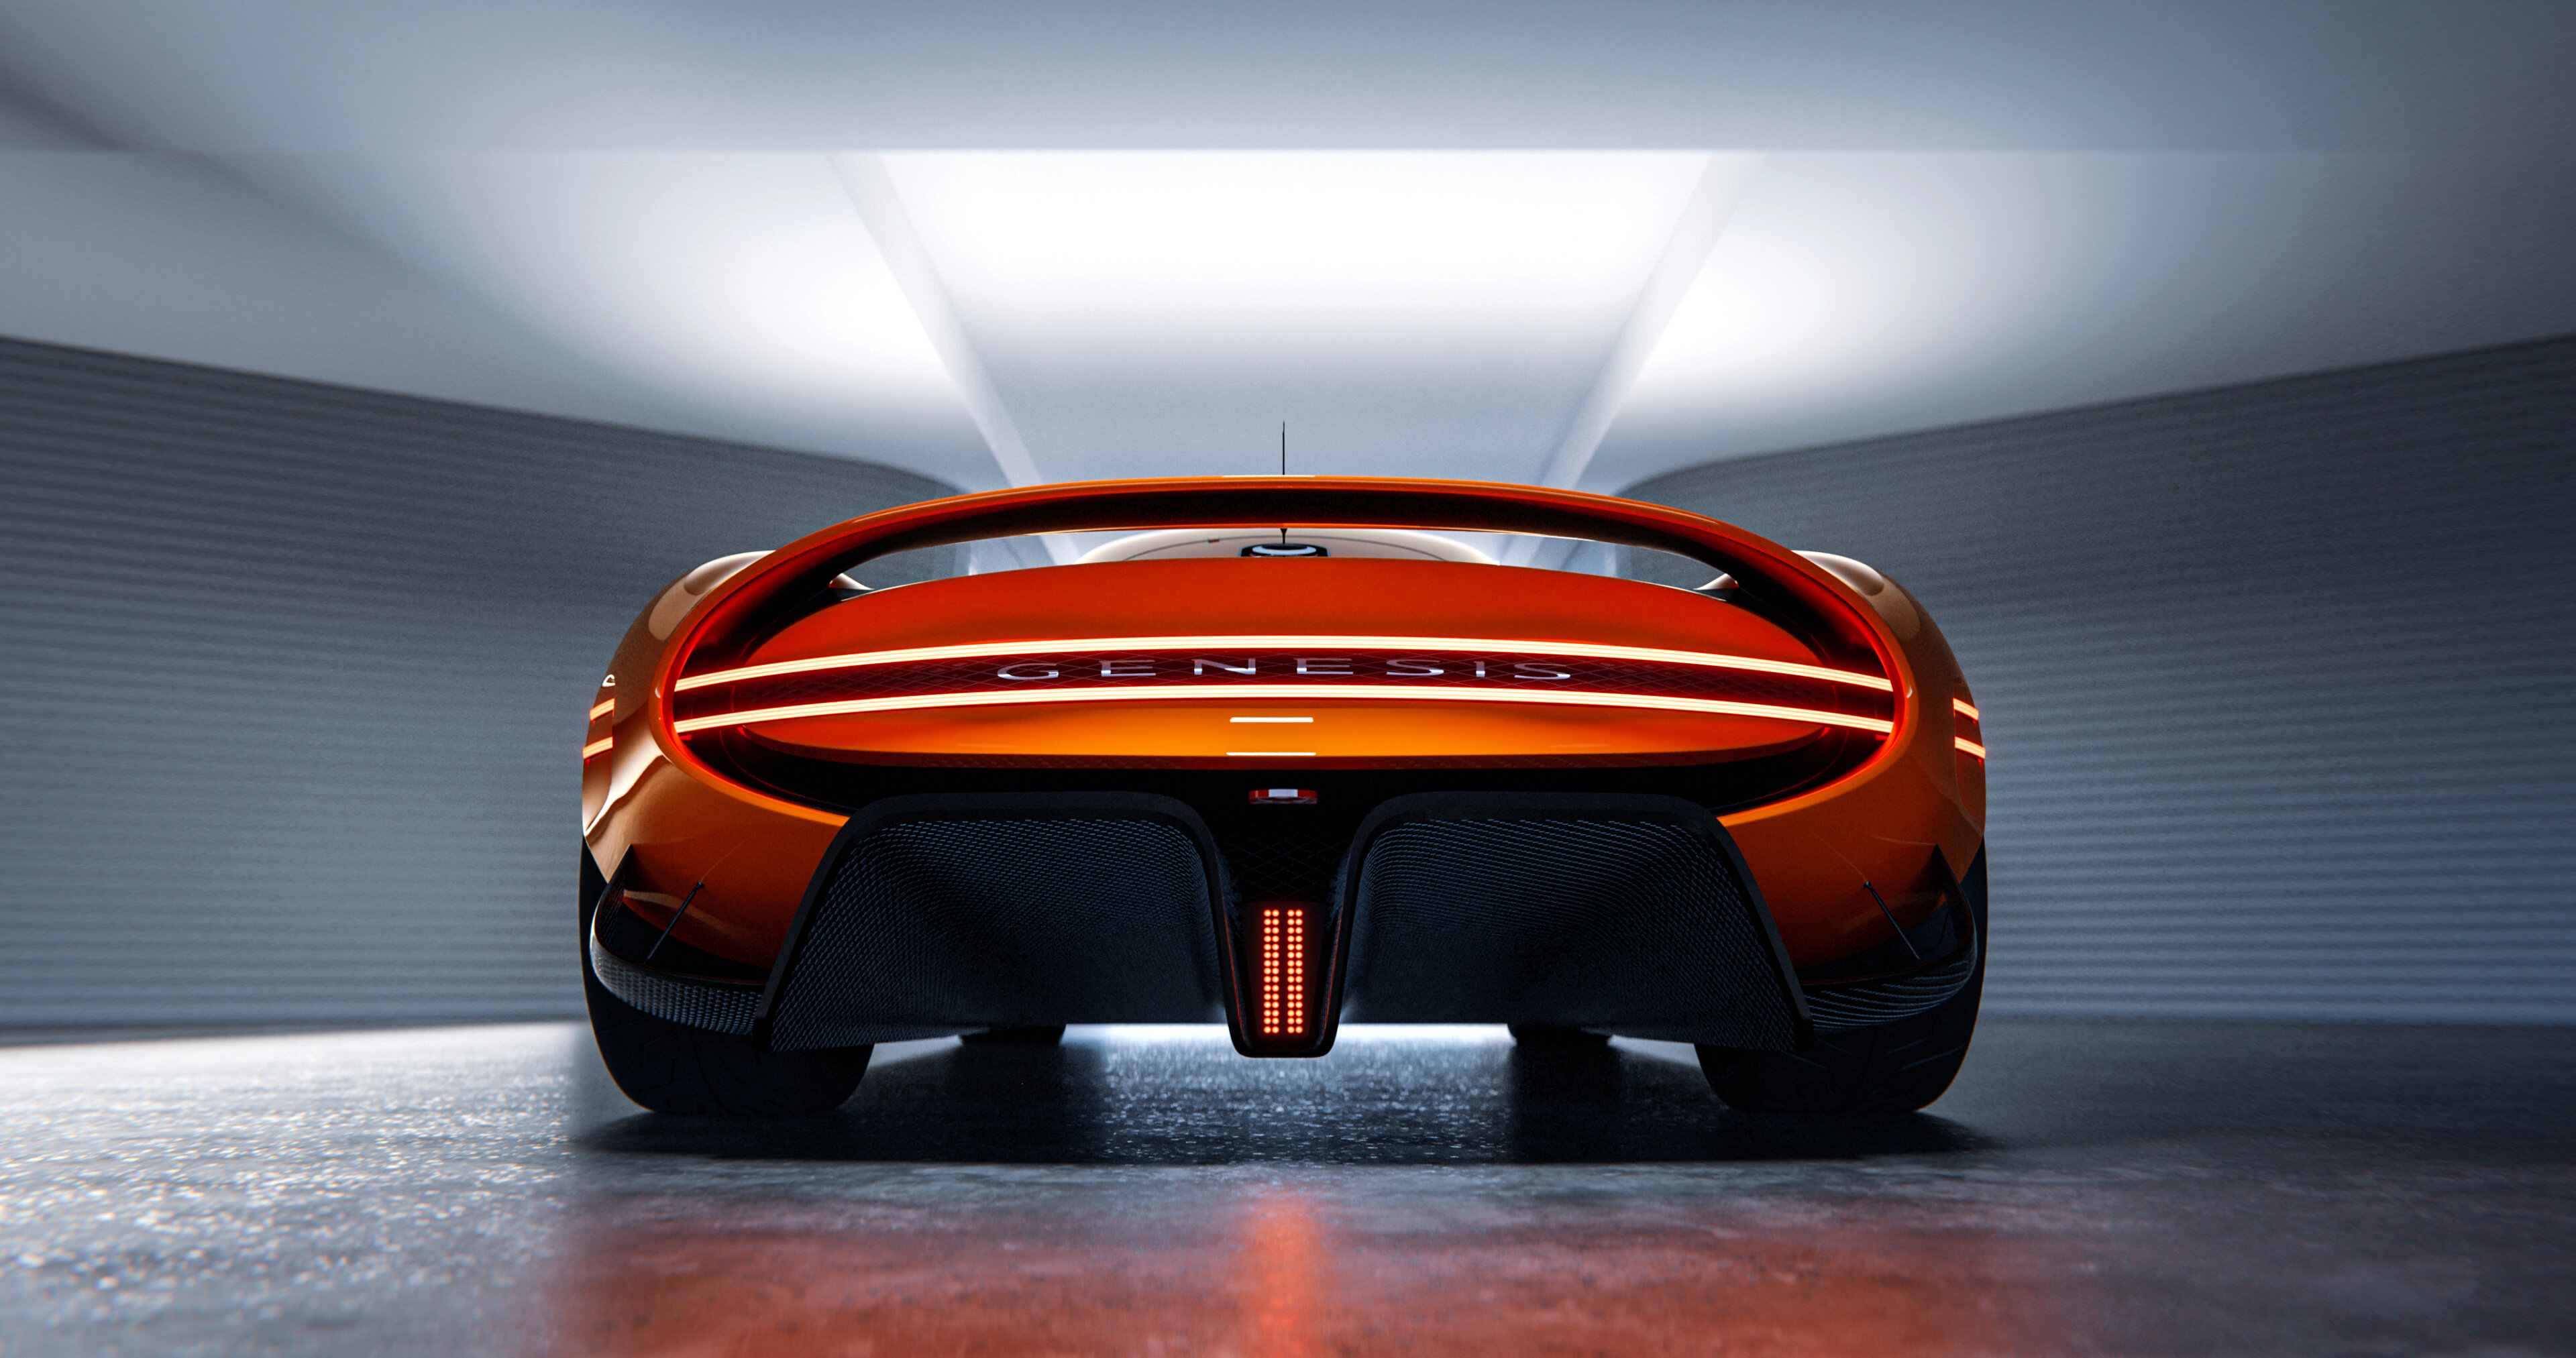 Gran Turismo's Creators Are Helping Develop A Real Car, News